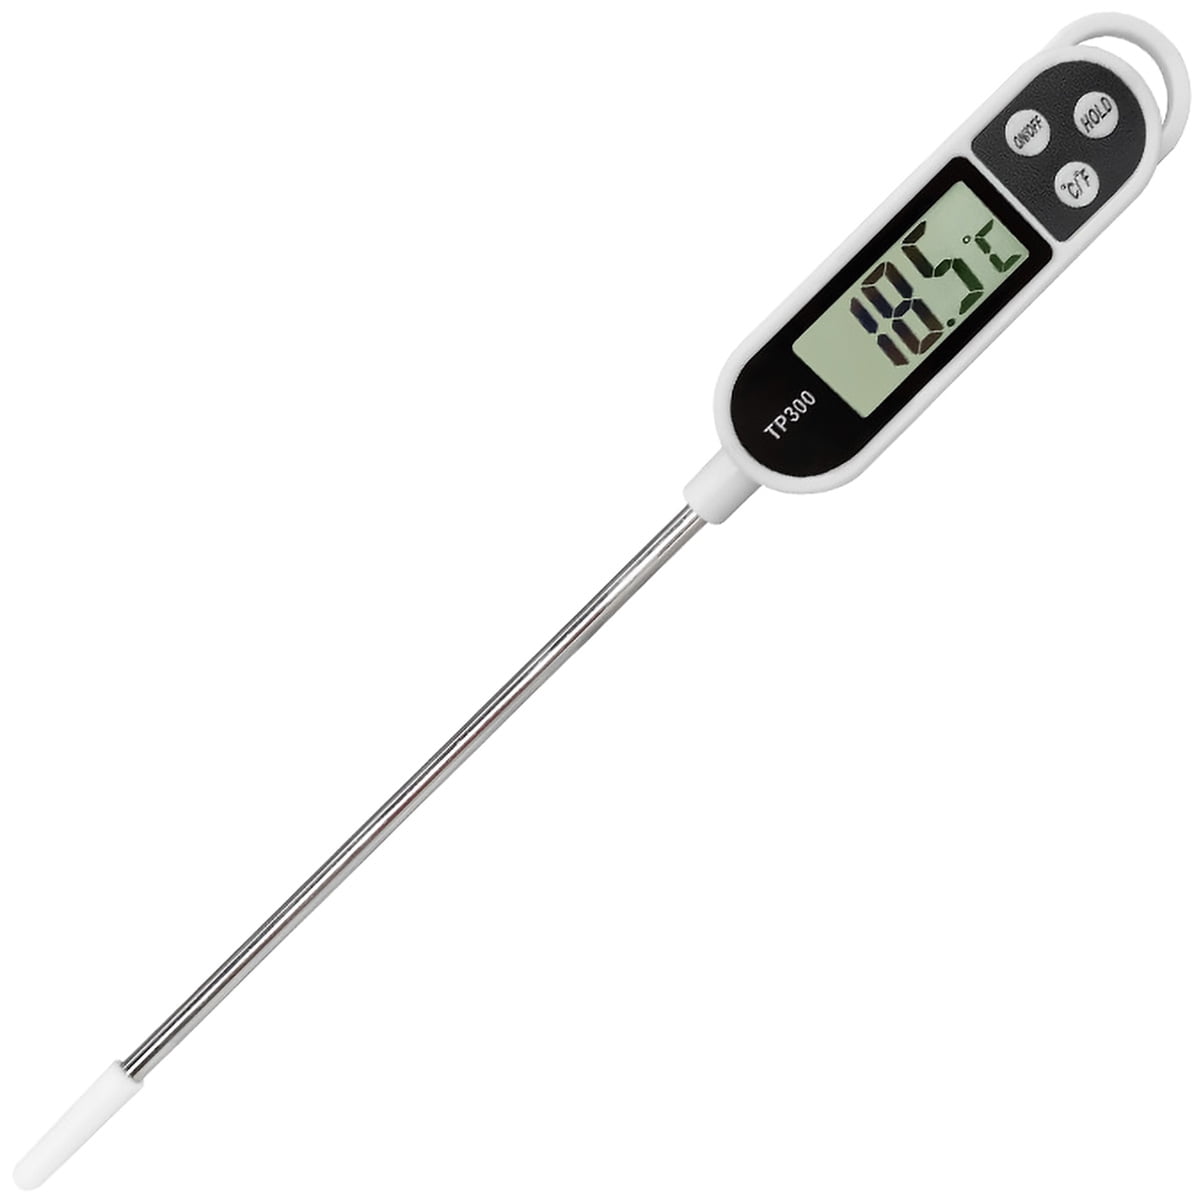 Steak Button Thermometer - New Kitchen Store